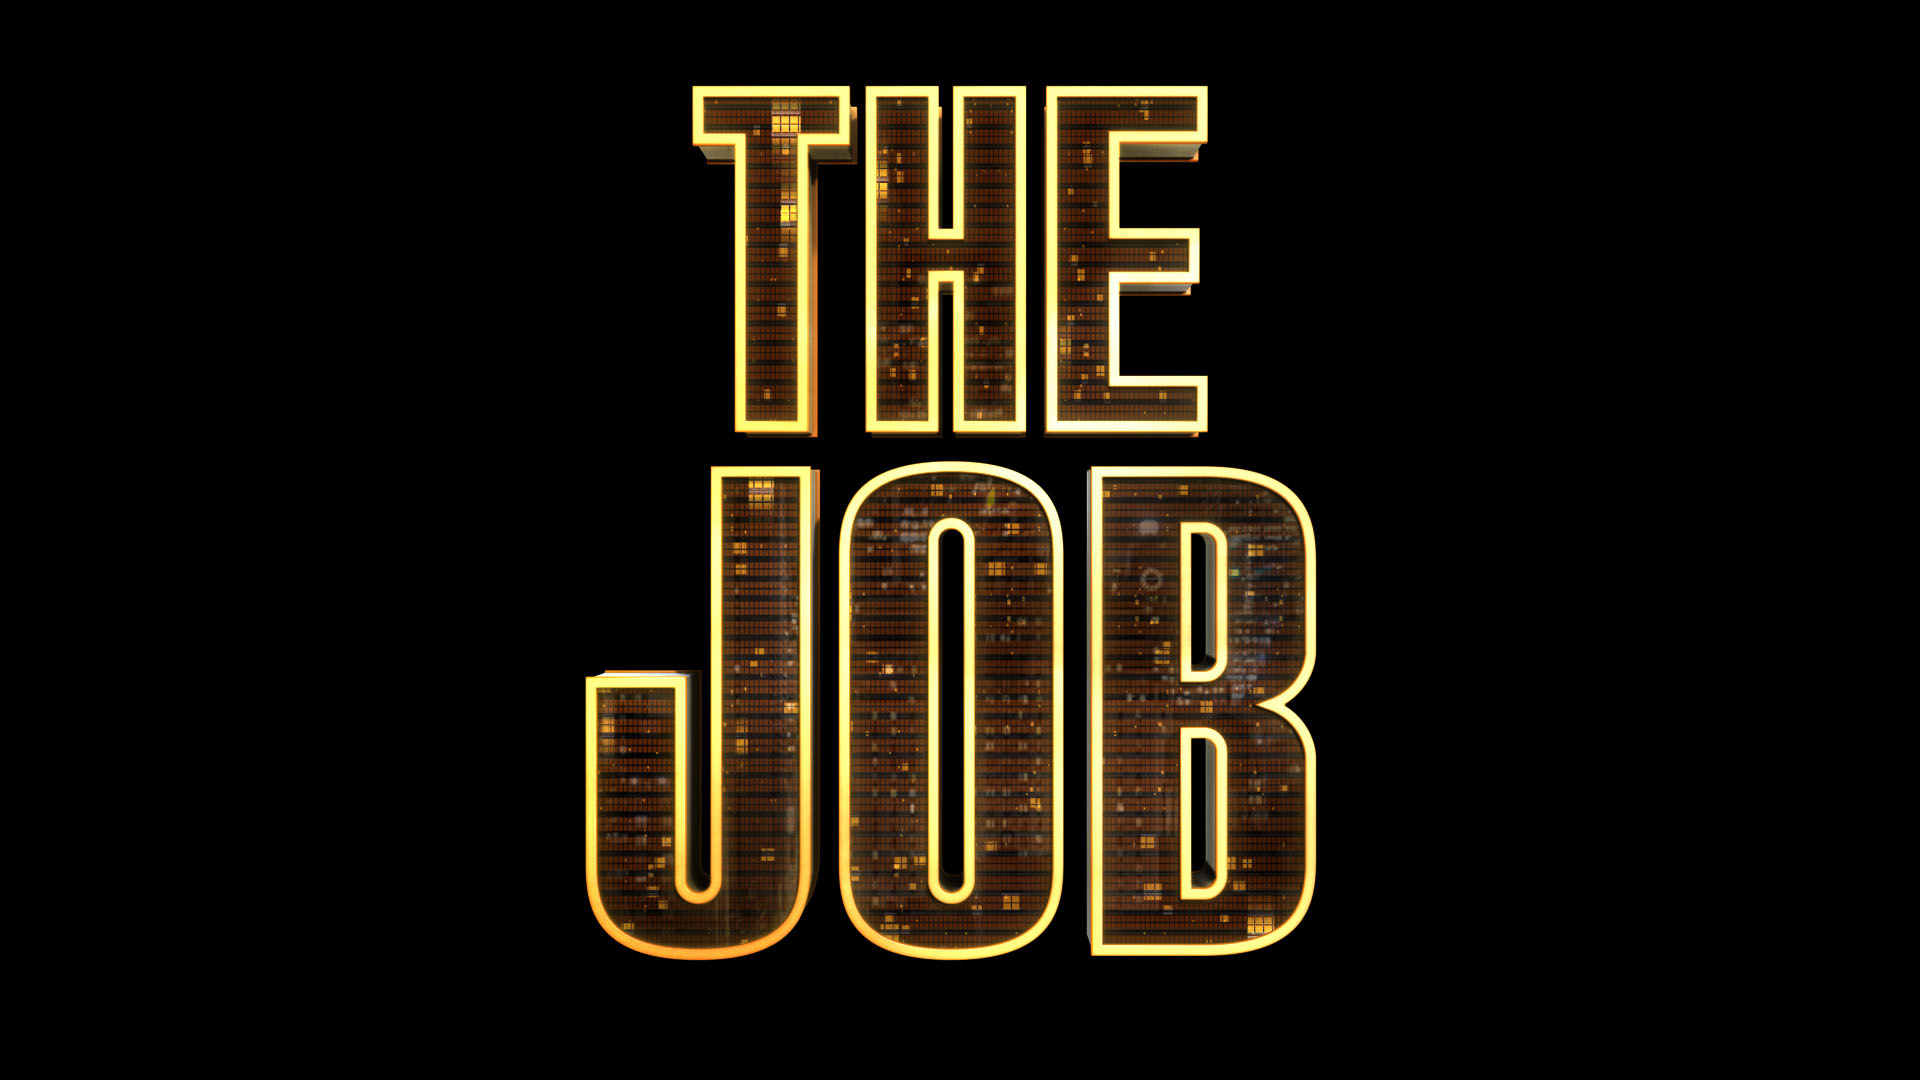 The job logo- add cbs.jpg